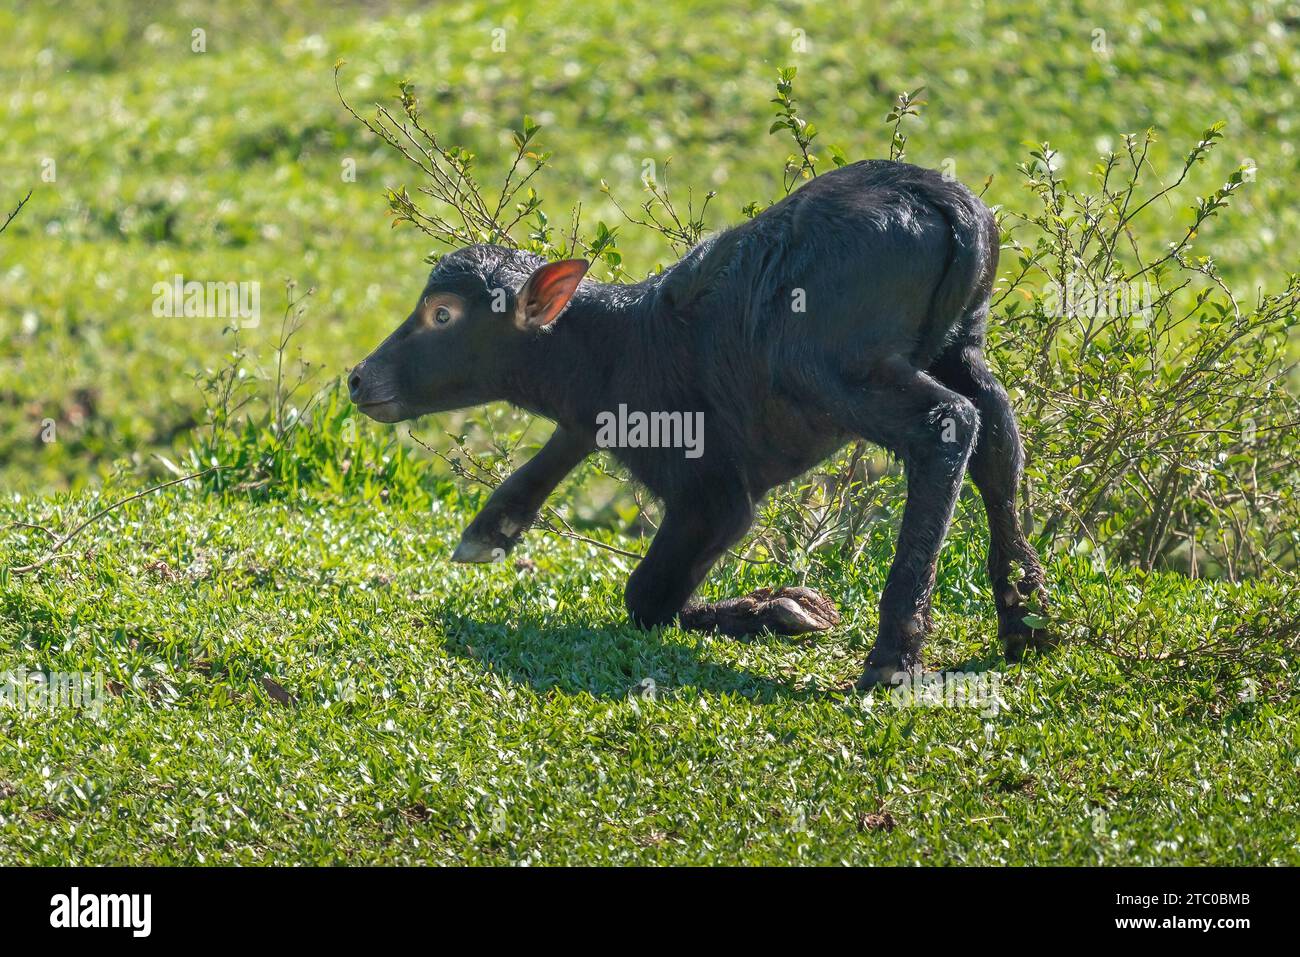 Italian Mediterranean Buffalo calf learning to walk - Water Buffalo (Bubalus bubalis) Stock Photo